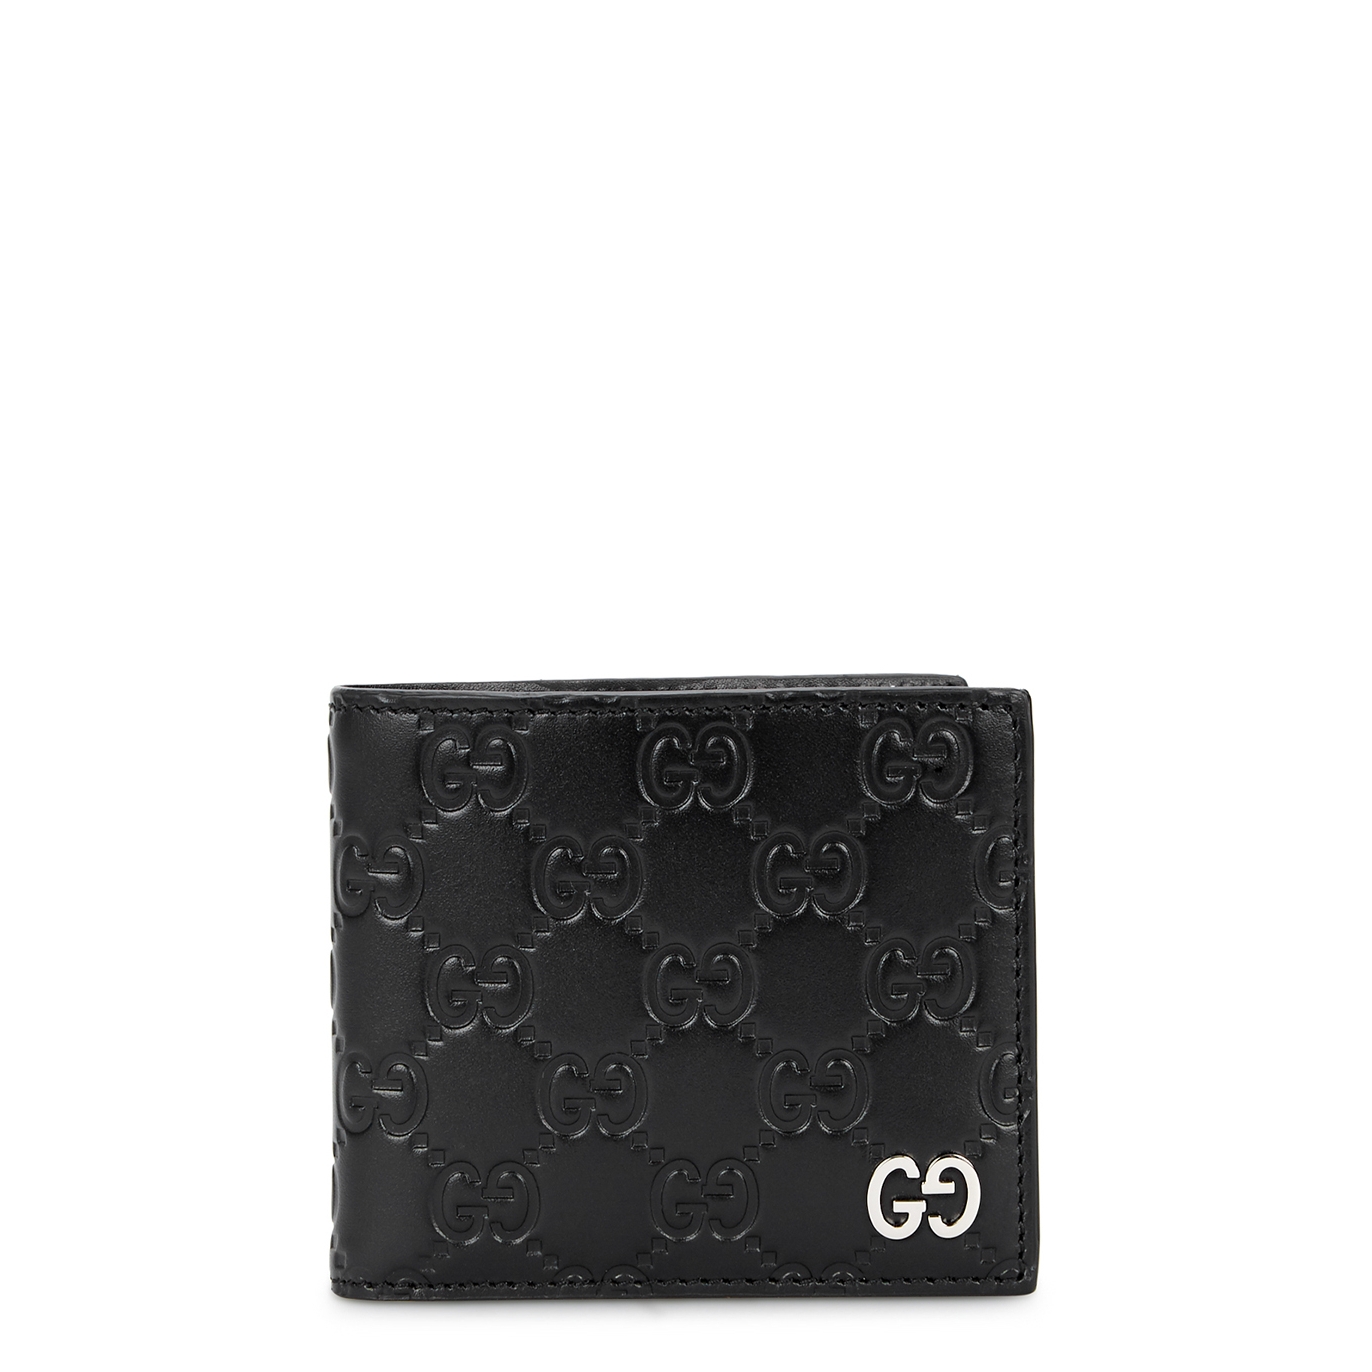 Gucci Dorian Black Leather Wallet